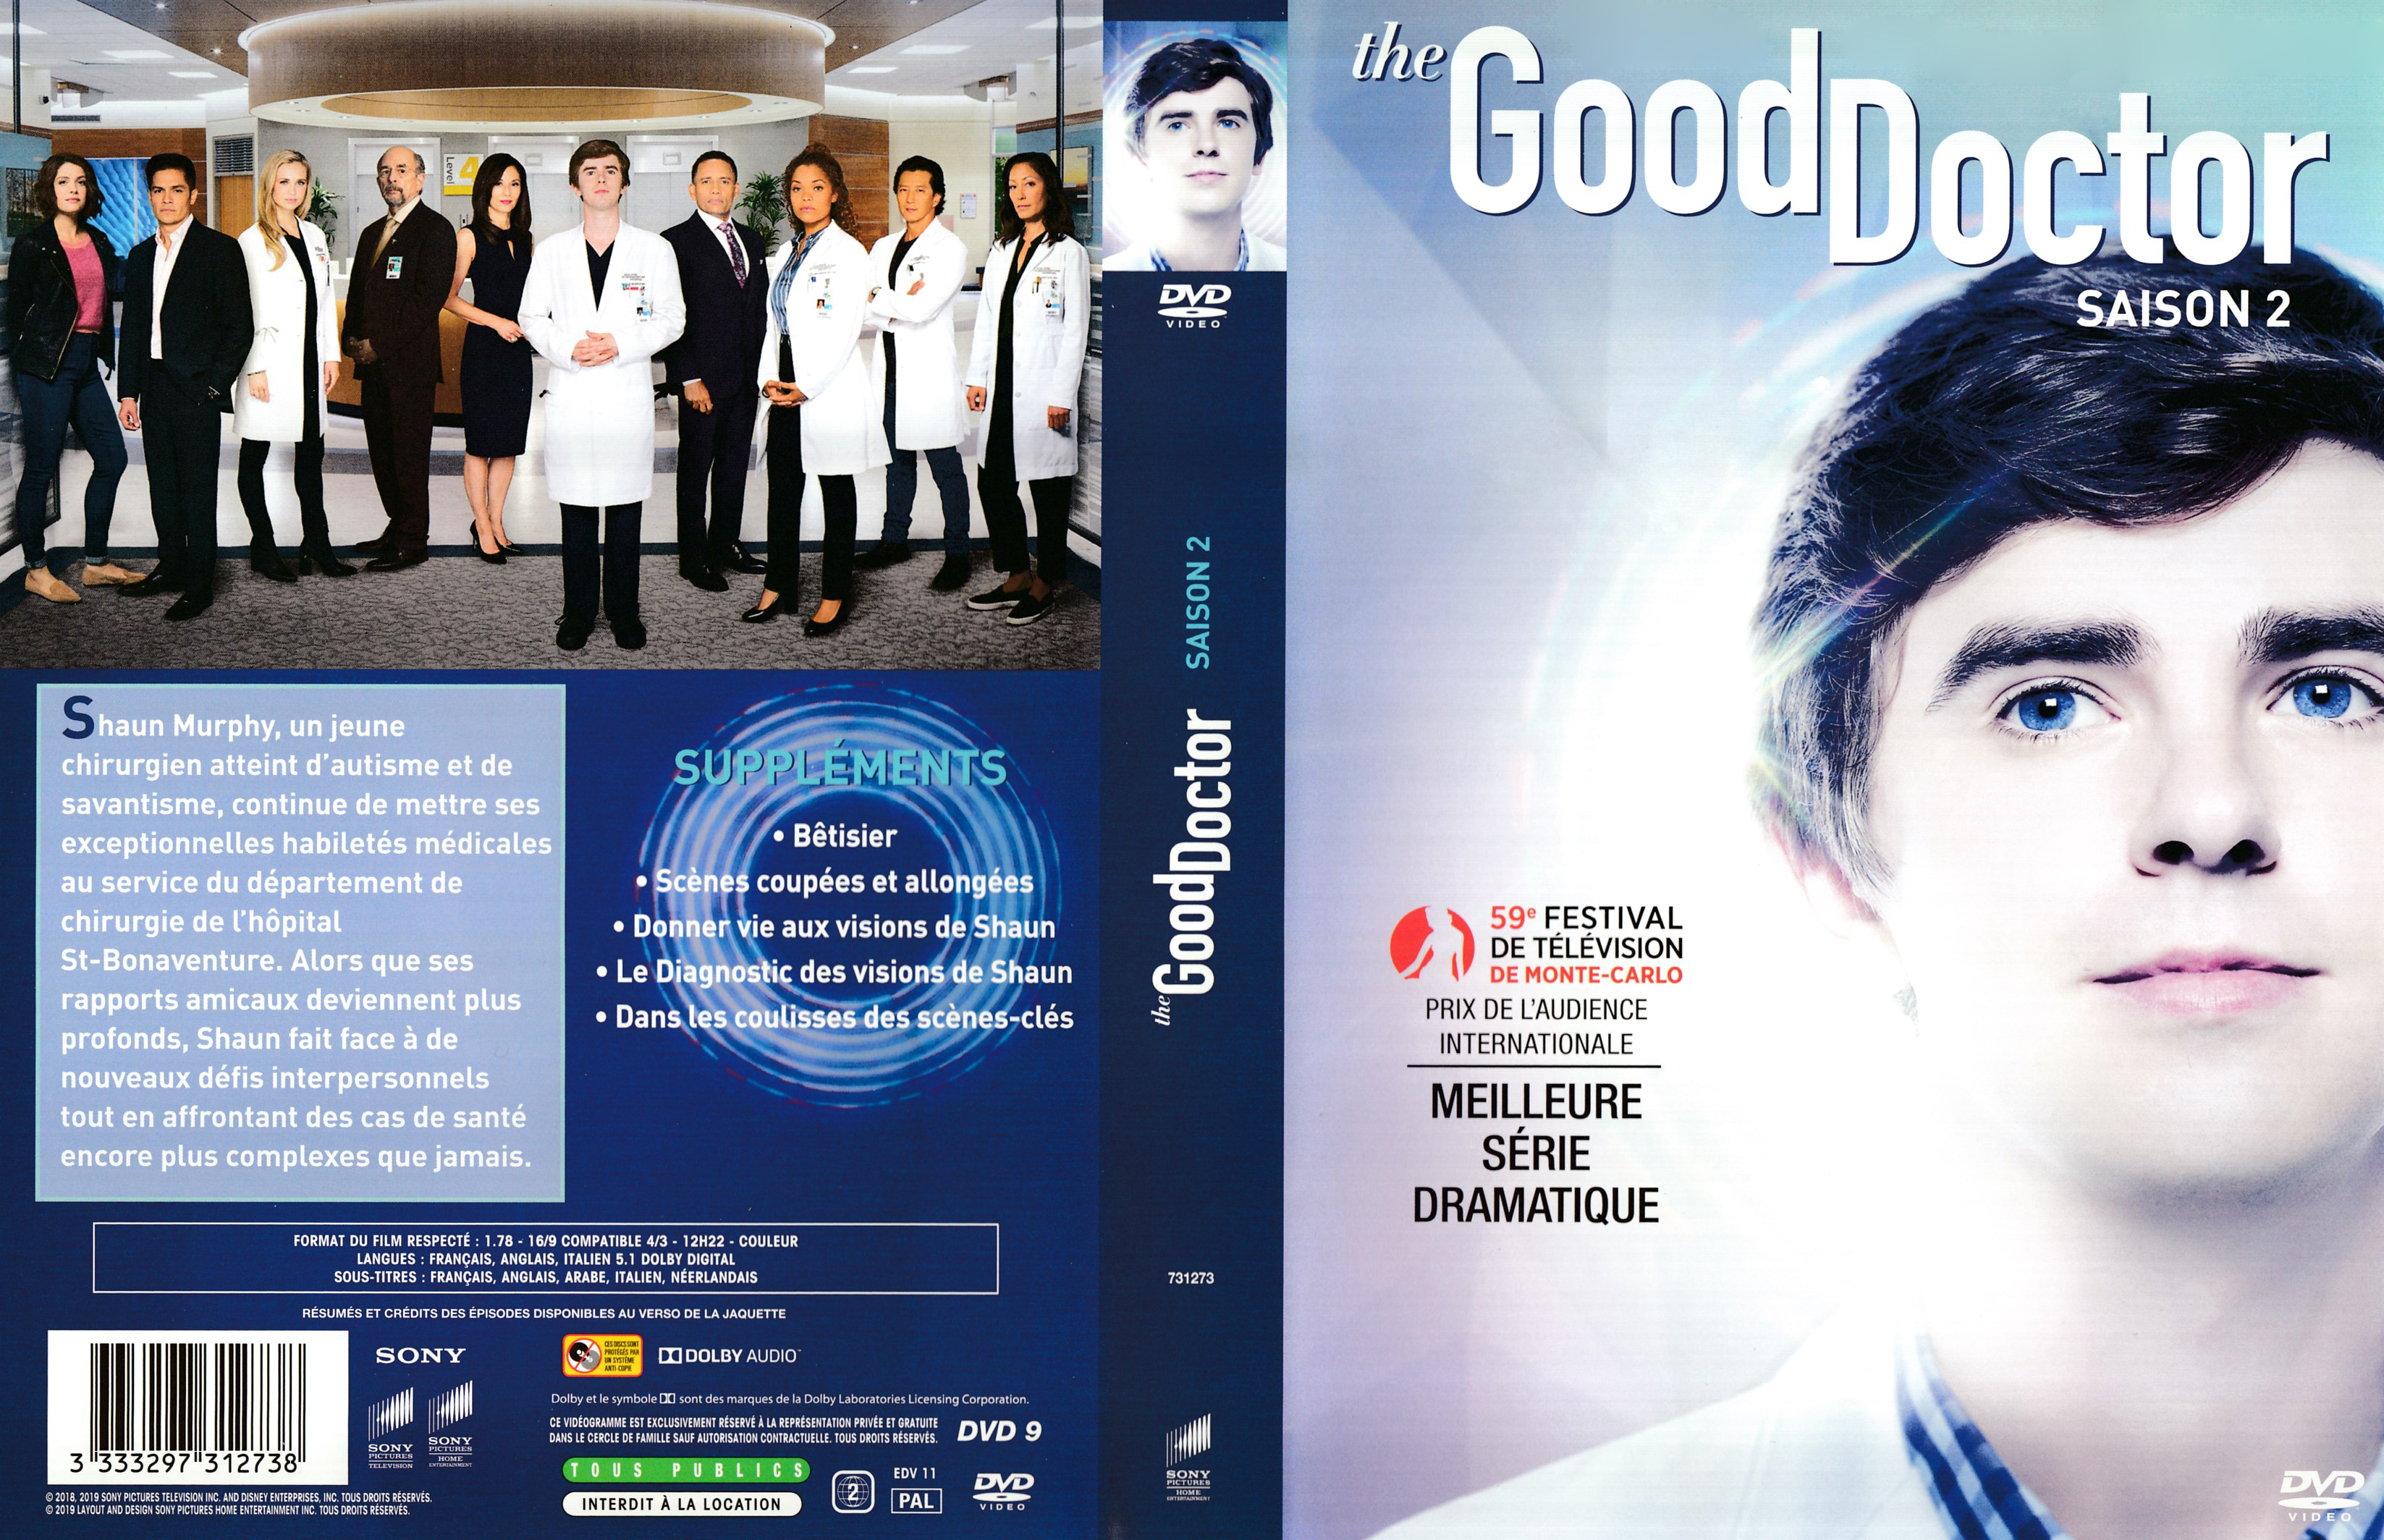 Jaquette DVD The Good Doctor saison 2